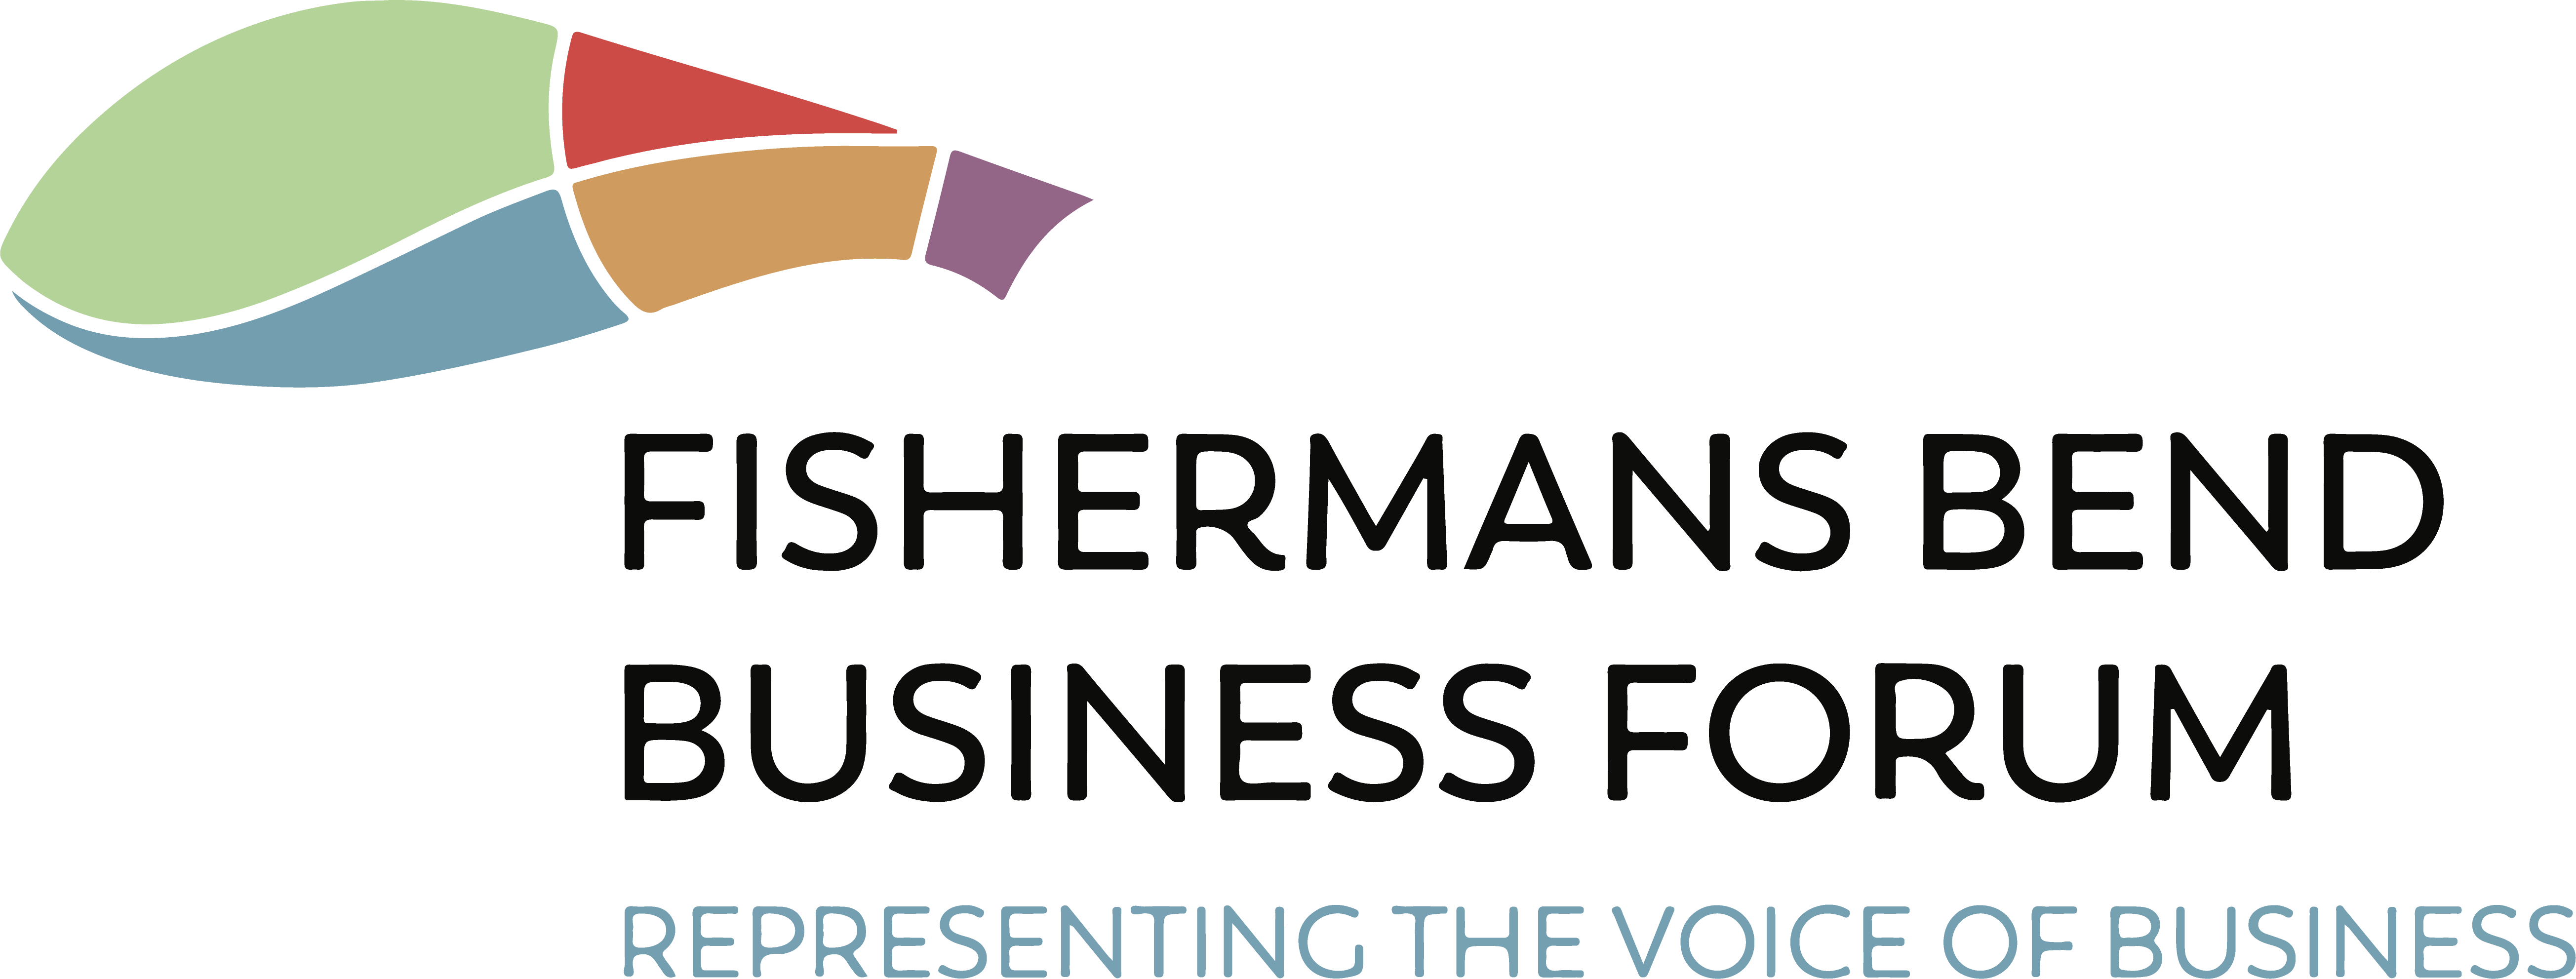 Fishermans Bend Business Forum